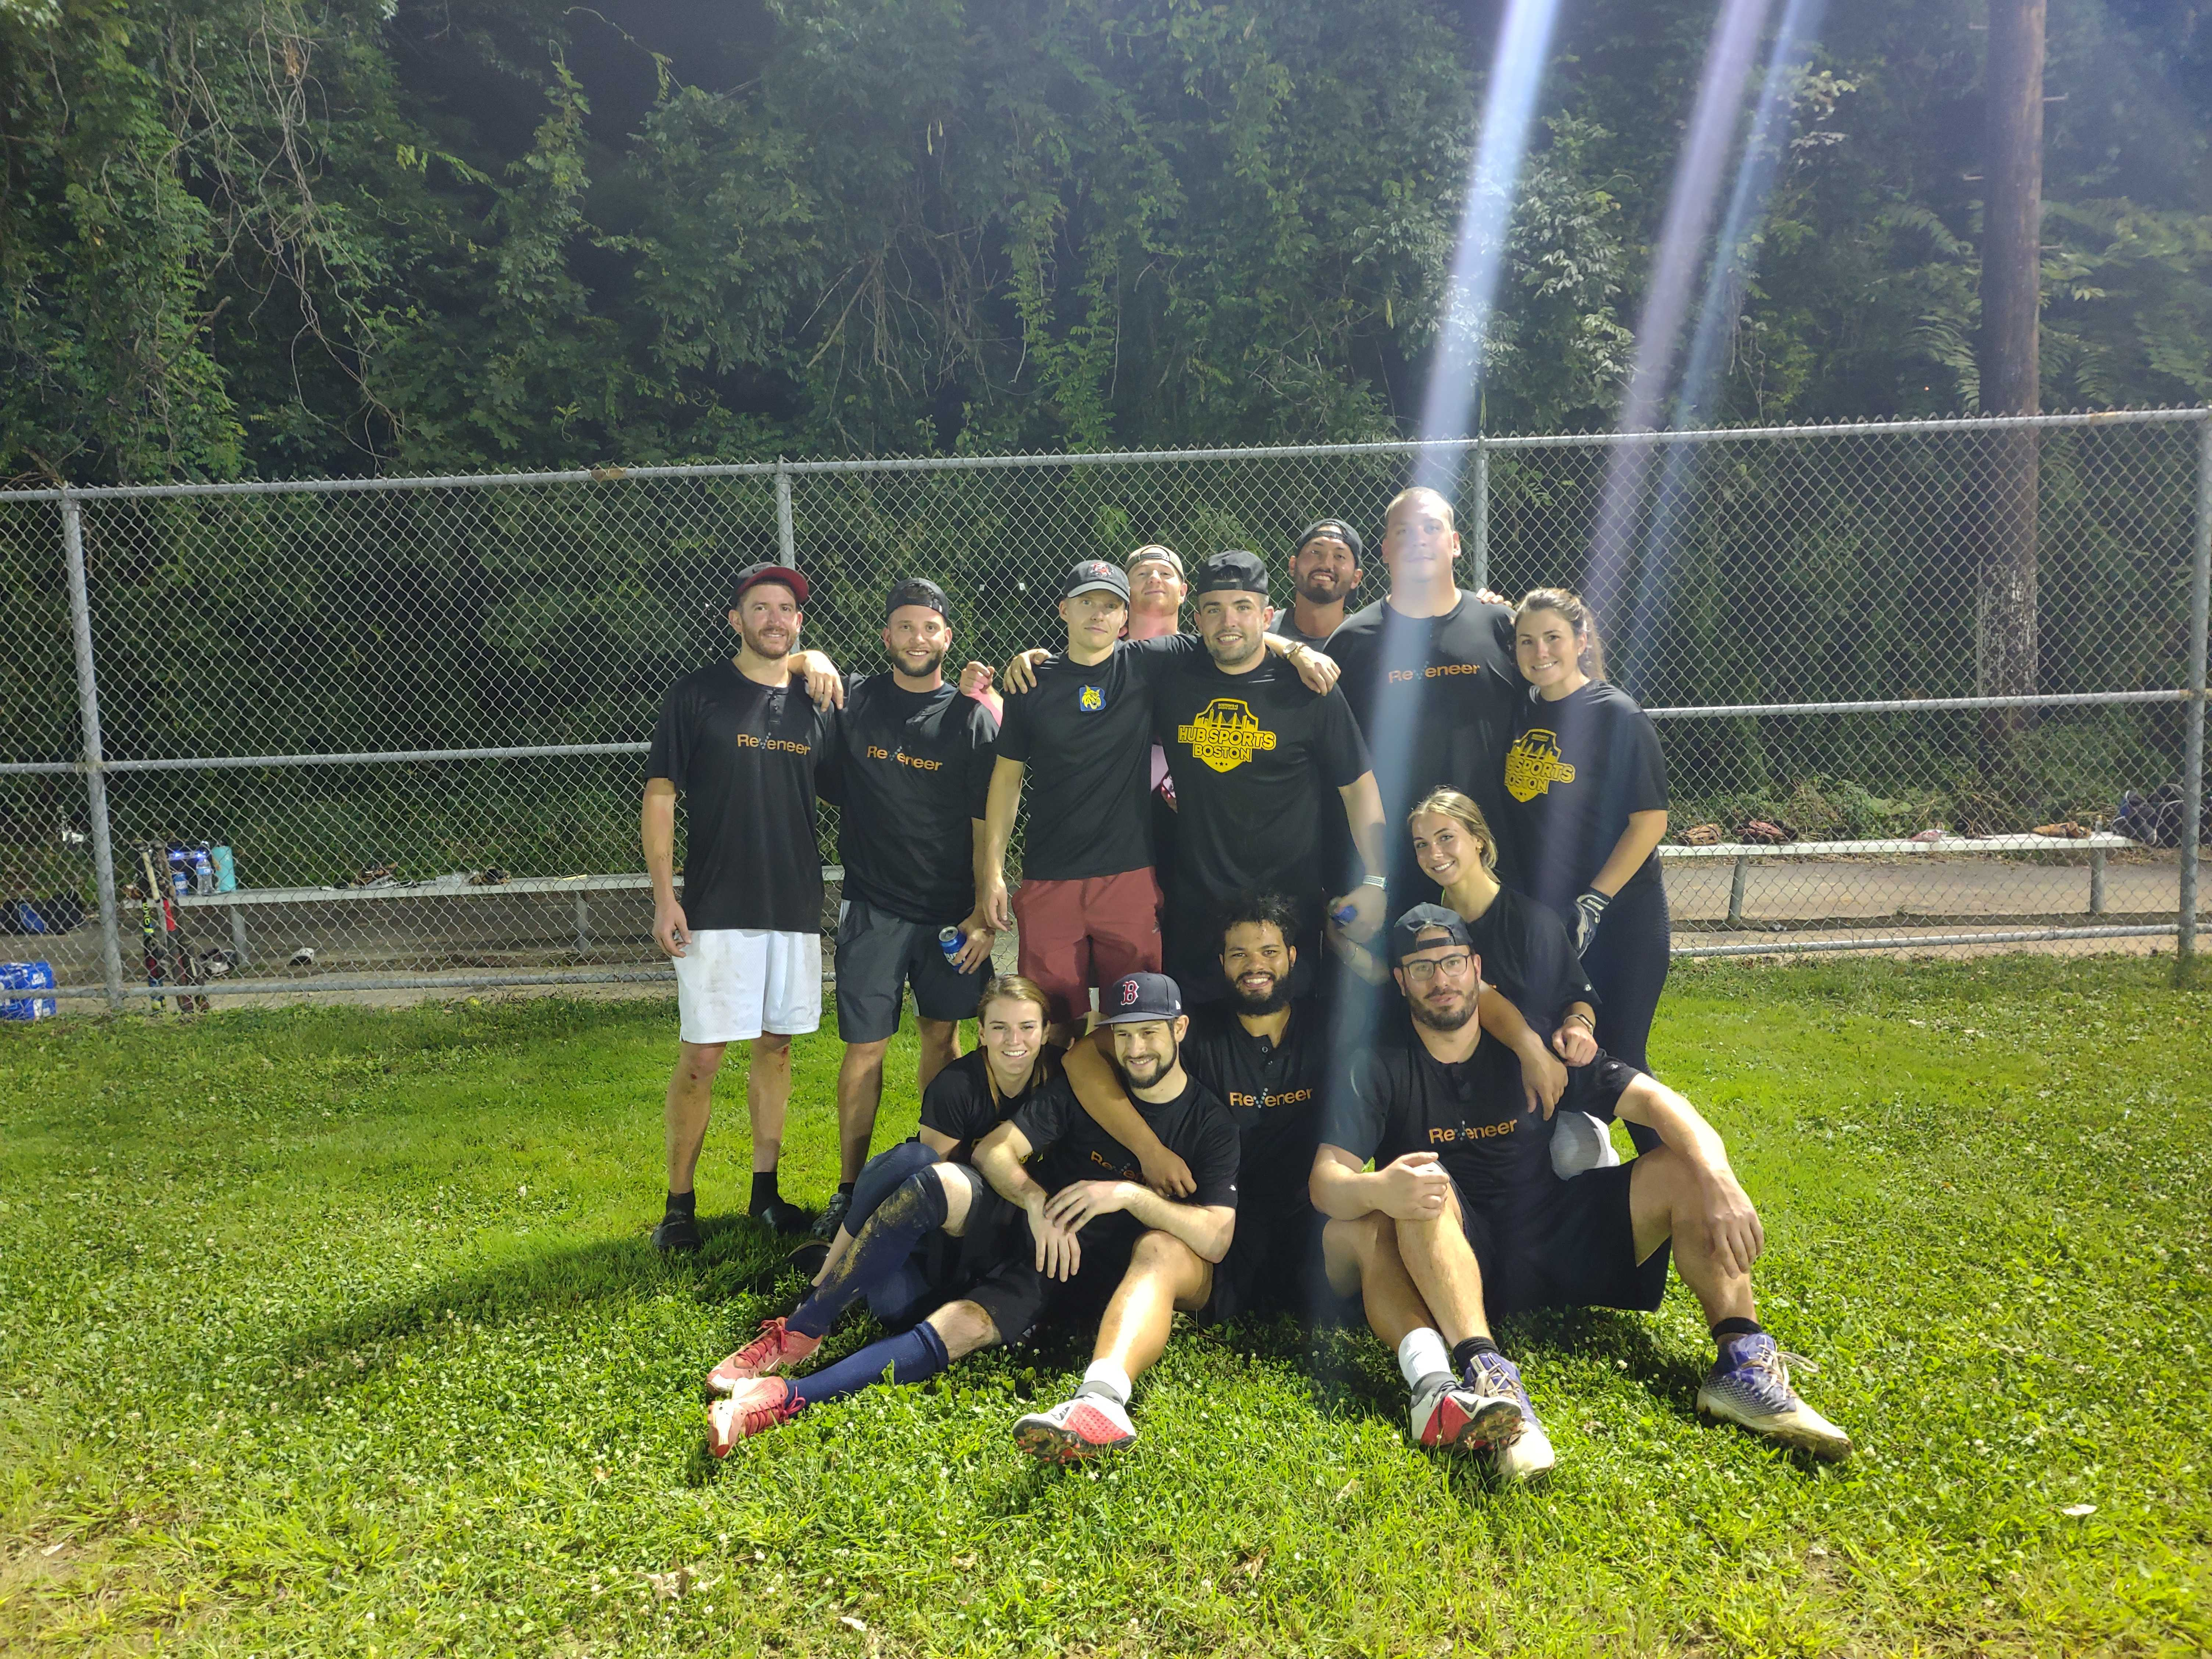 Reveneer employees in a group photo on a baseball field